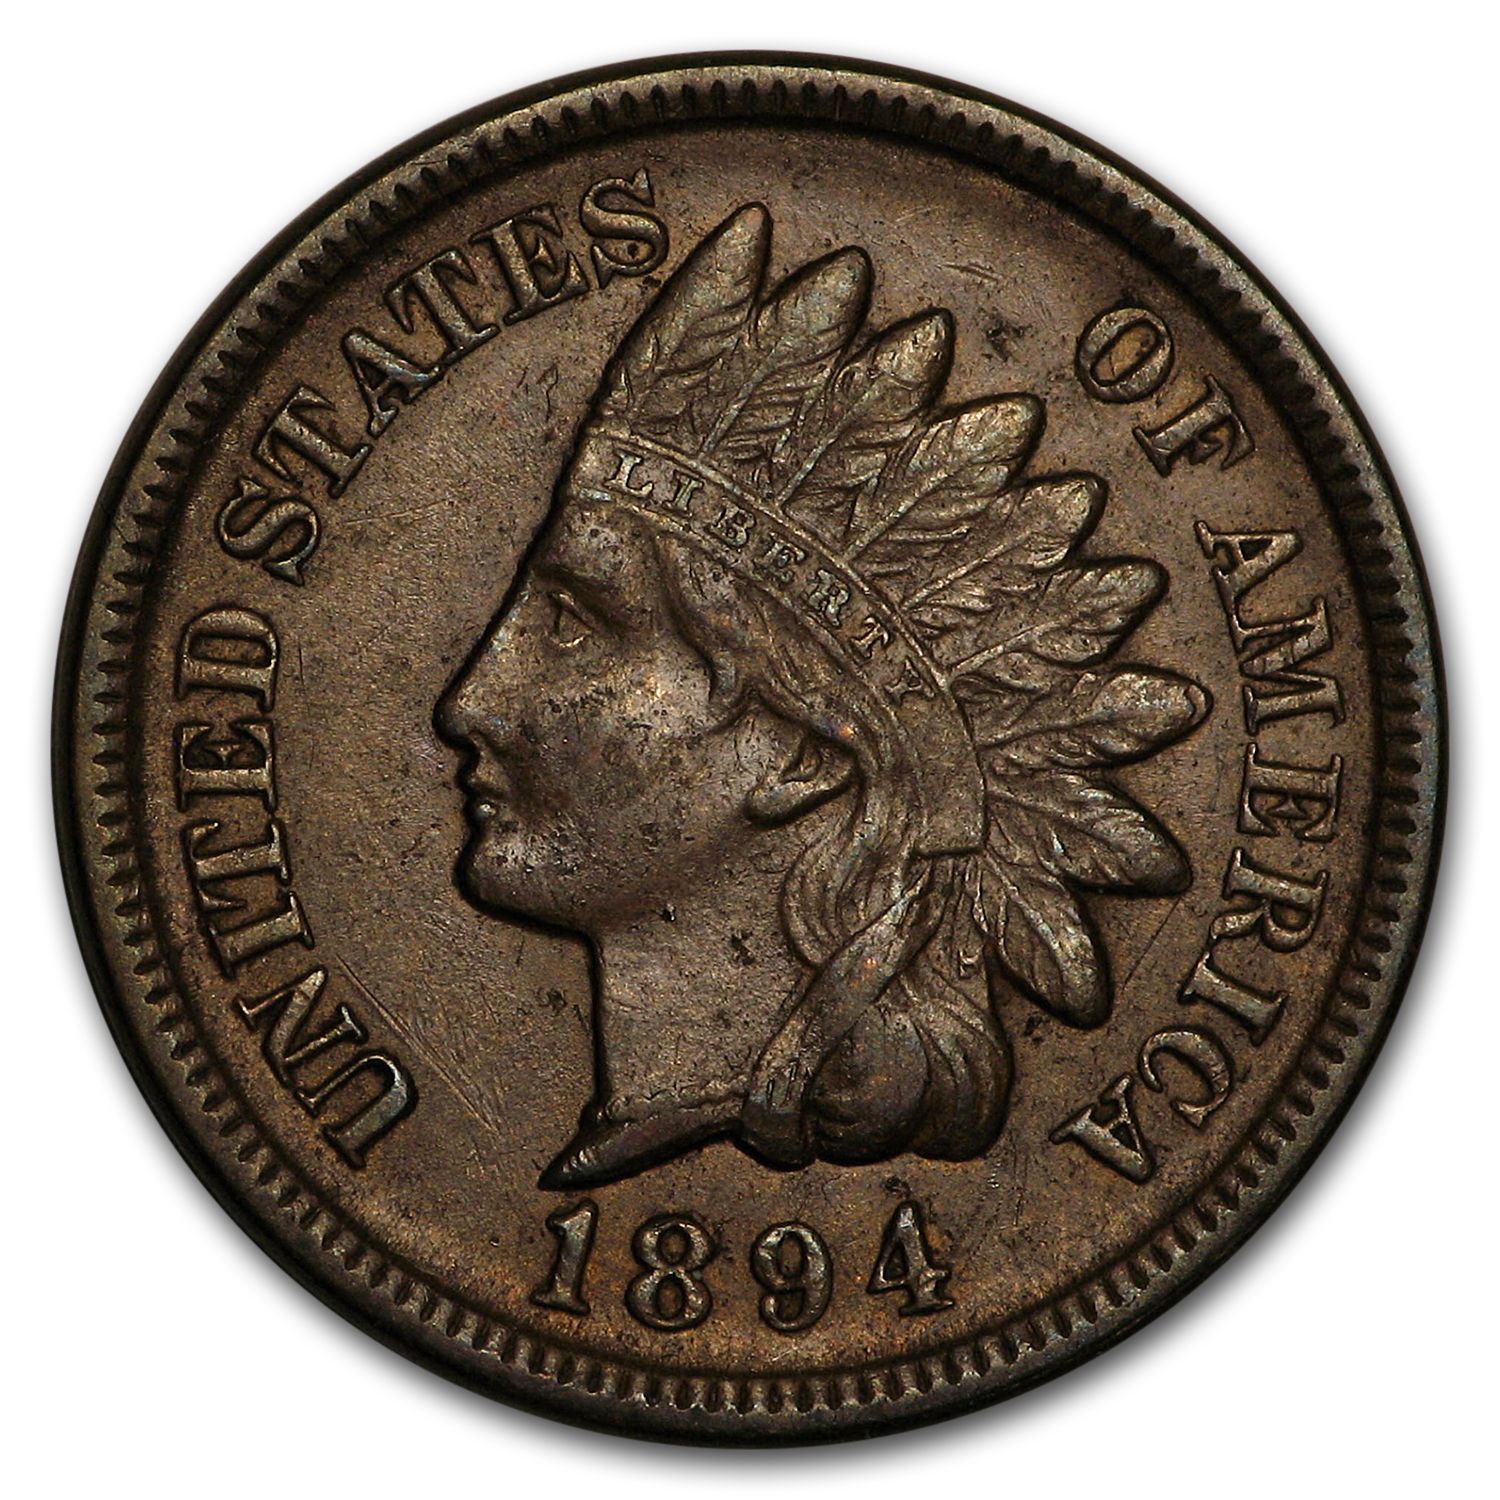 Buy 1894 Indian Head Cent AU